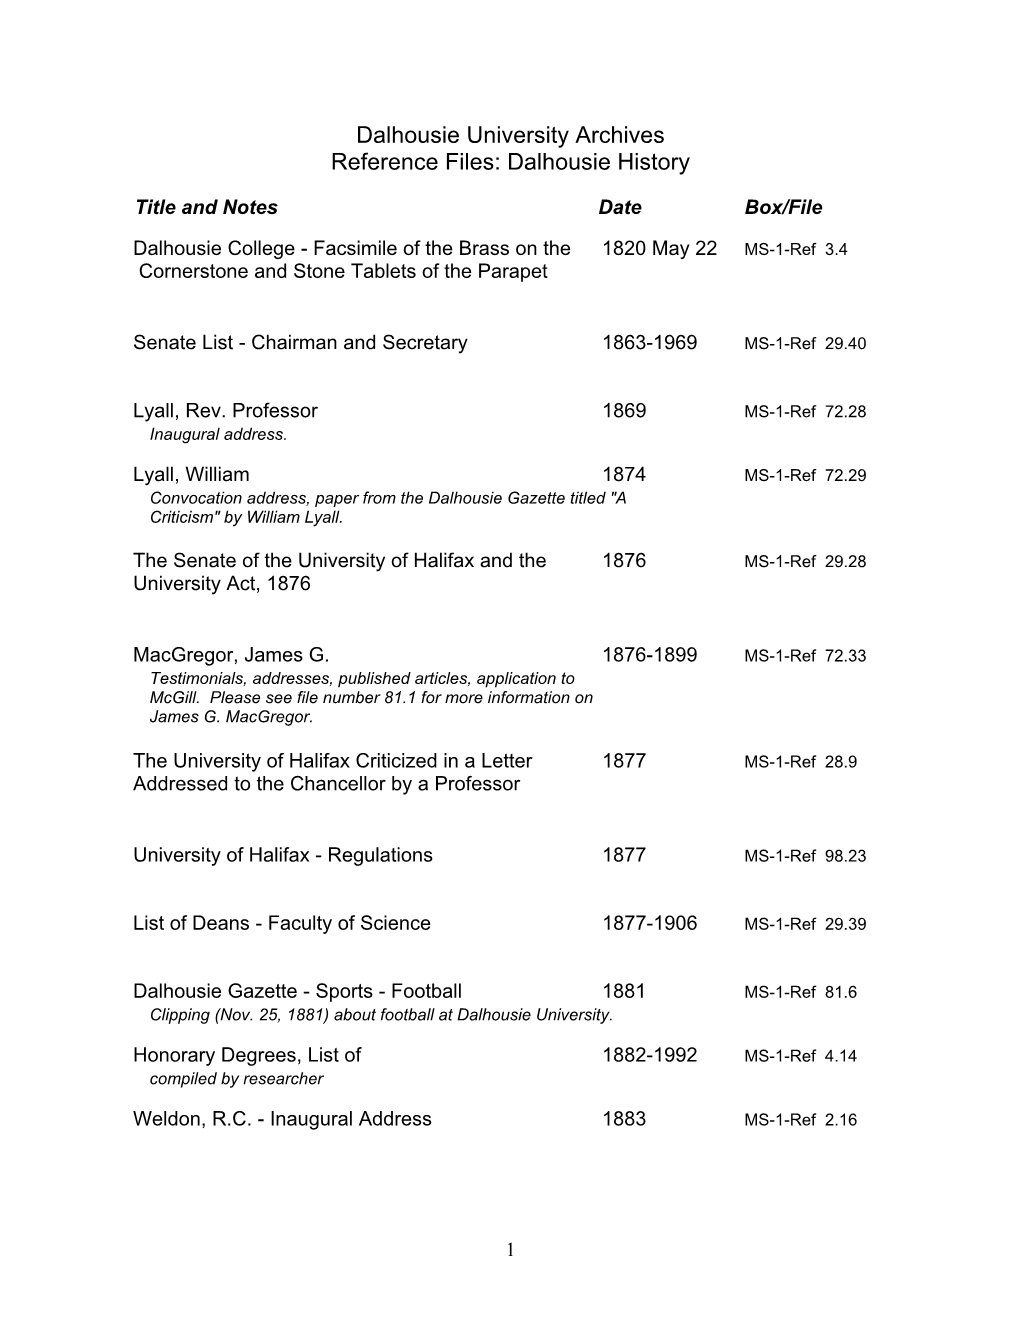 Dalhousie University Archives Reference Files: Dalhousie History